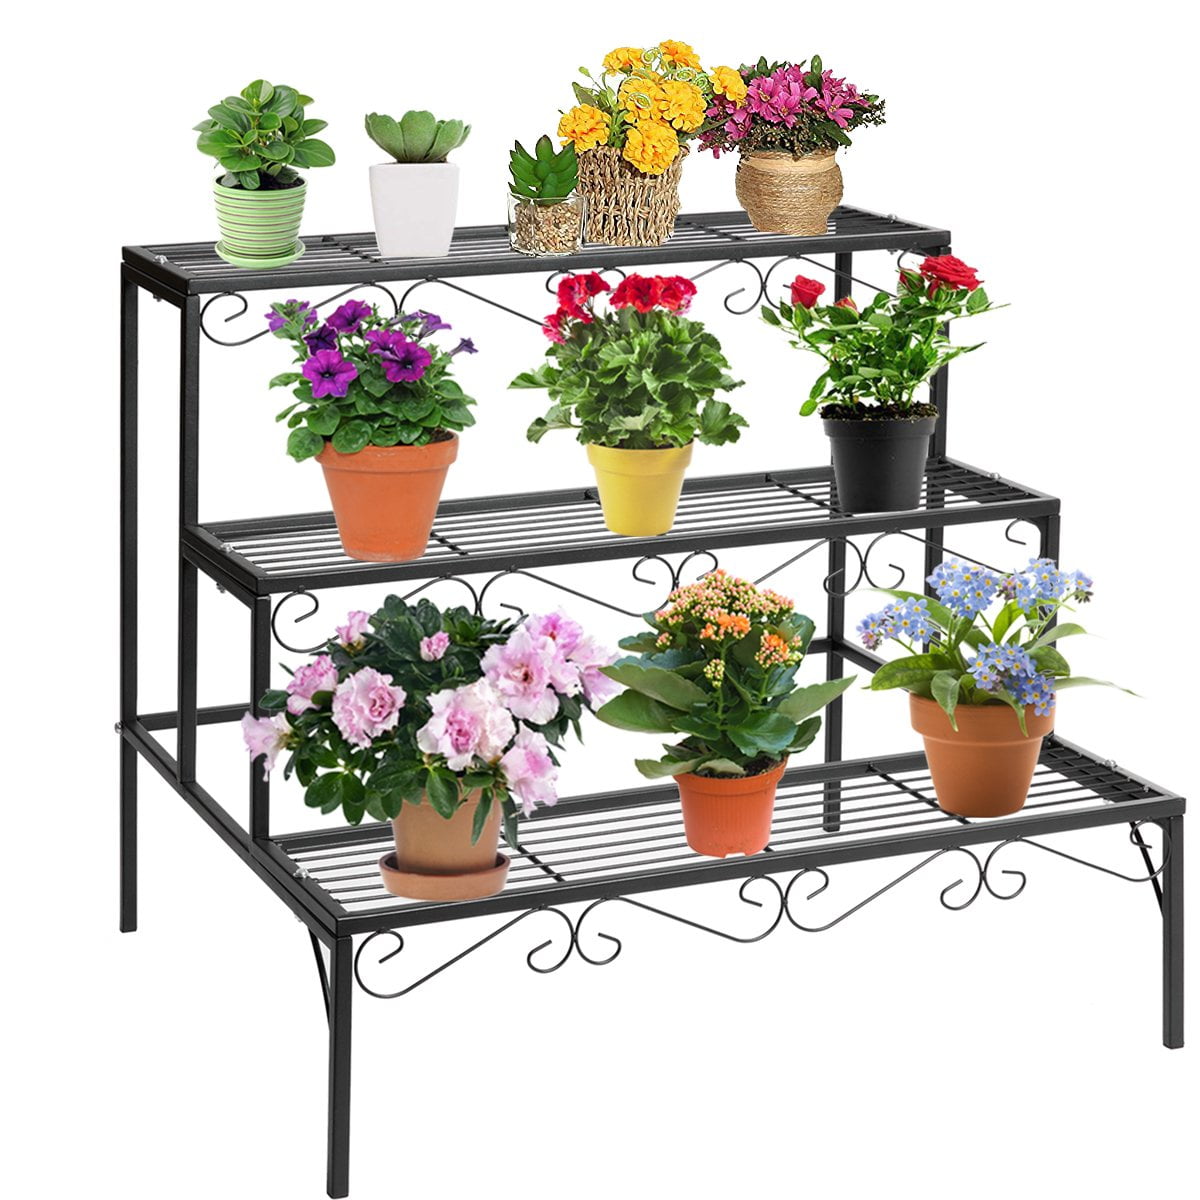 Metal Flower Iron Rack Garden Home Bonsai Plant Display Stand Holder Decor 